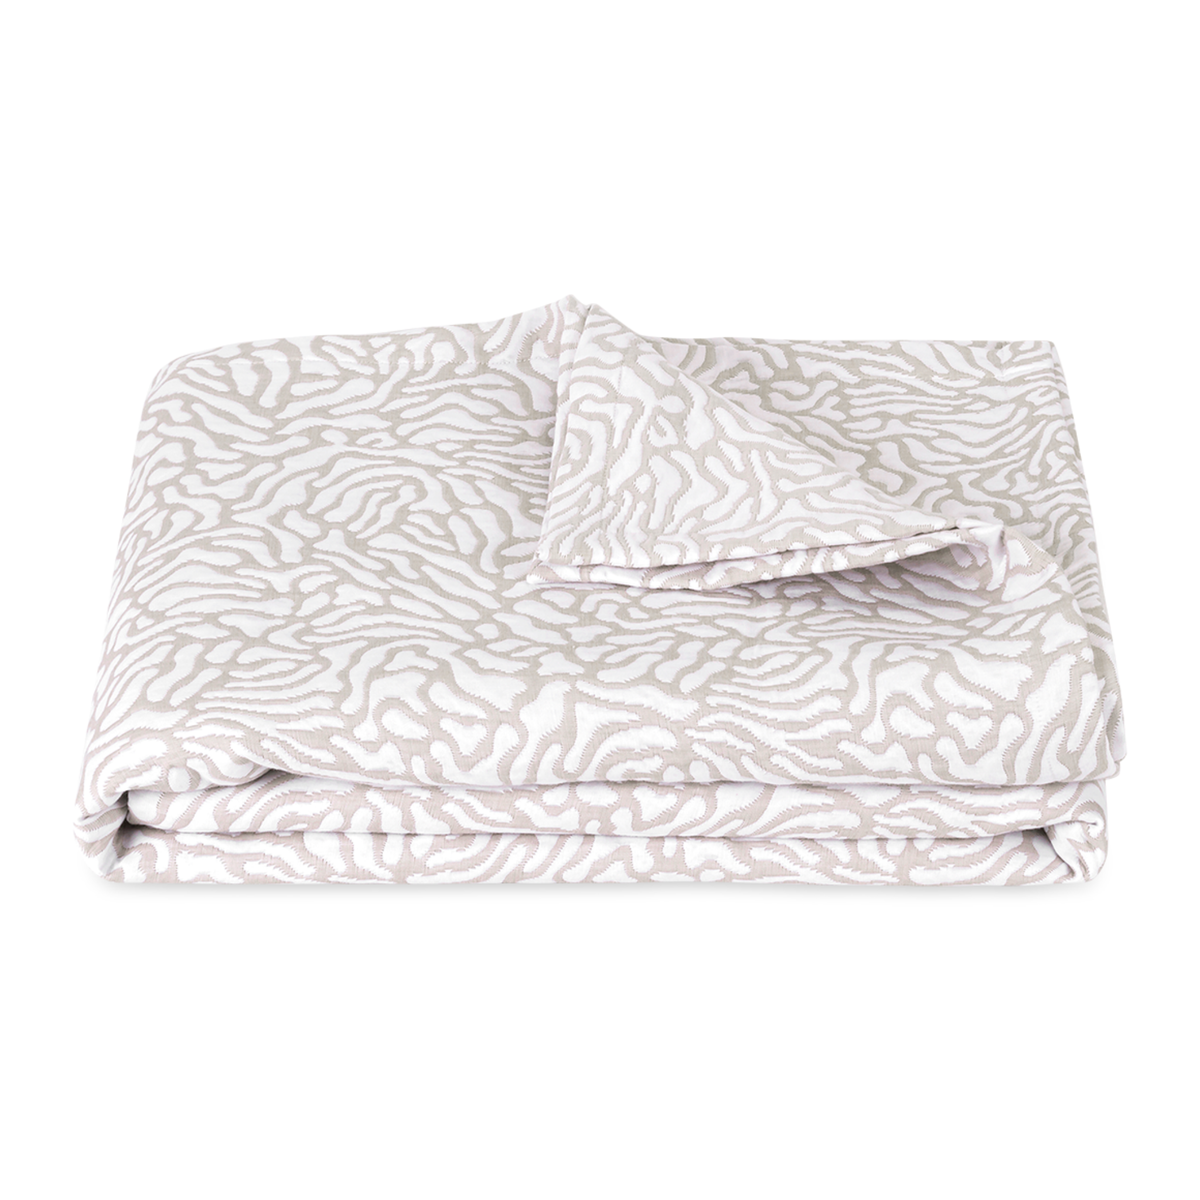 Folded Duvet Cover of Matouk Schumacher Cora Bedding in Natural White Color